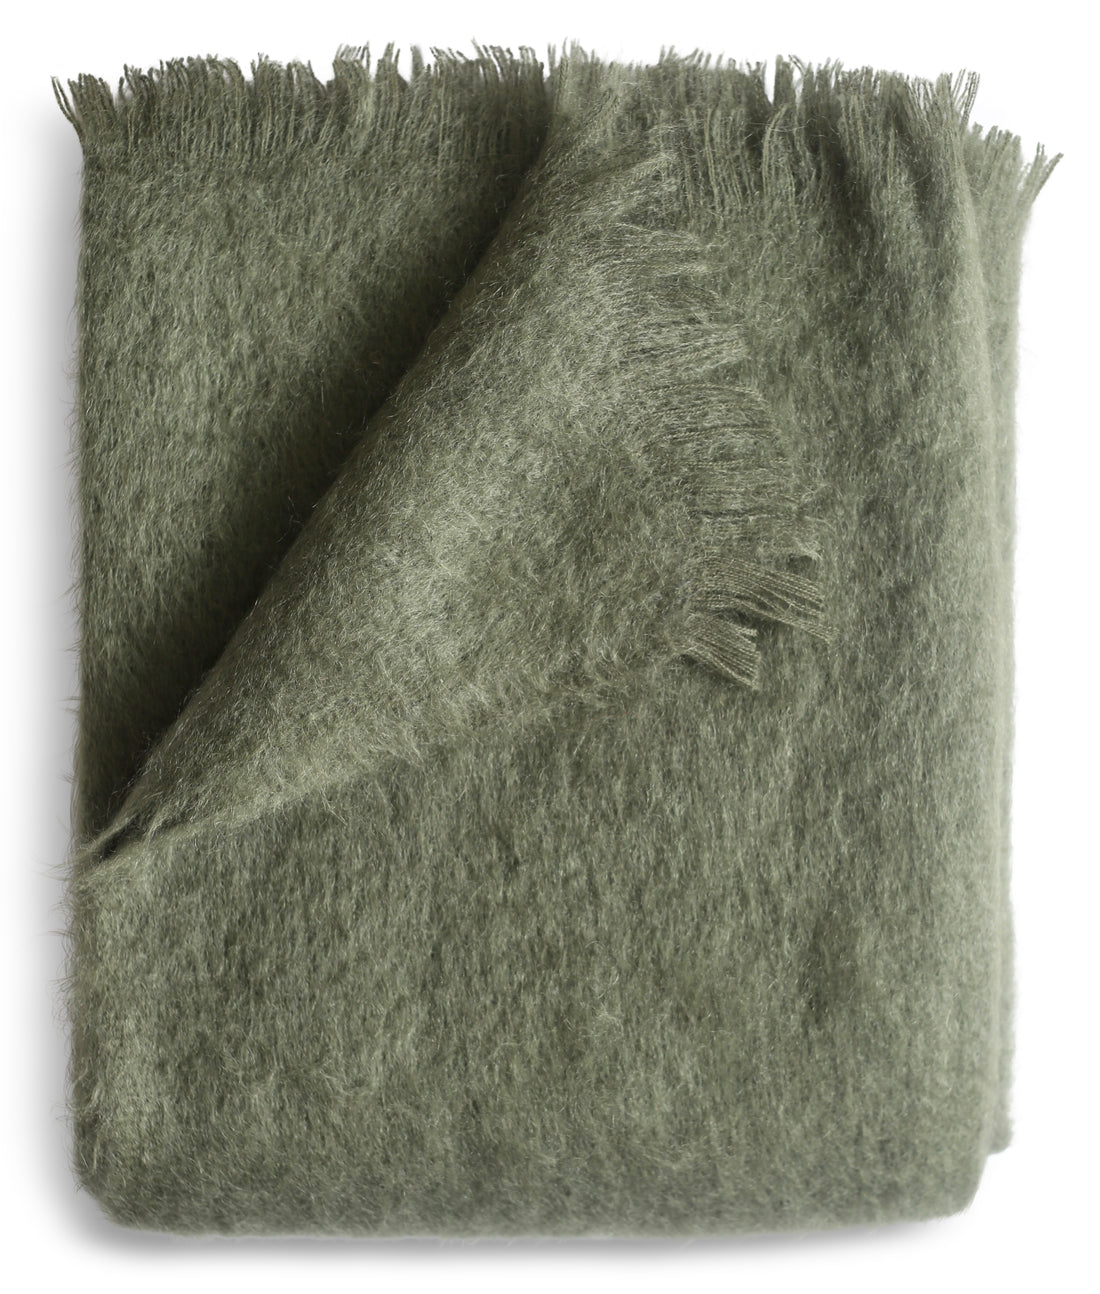 Folded moss green mohair throw blanket.